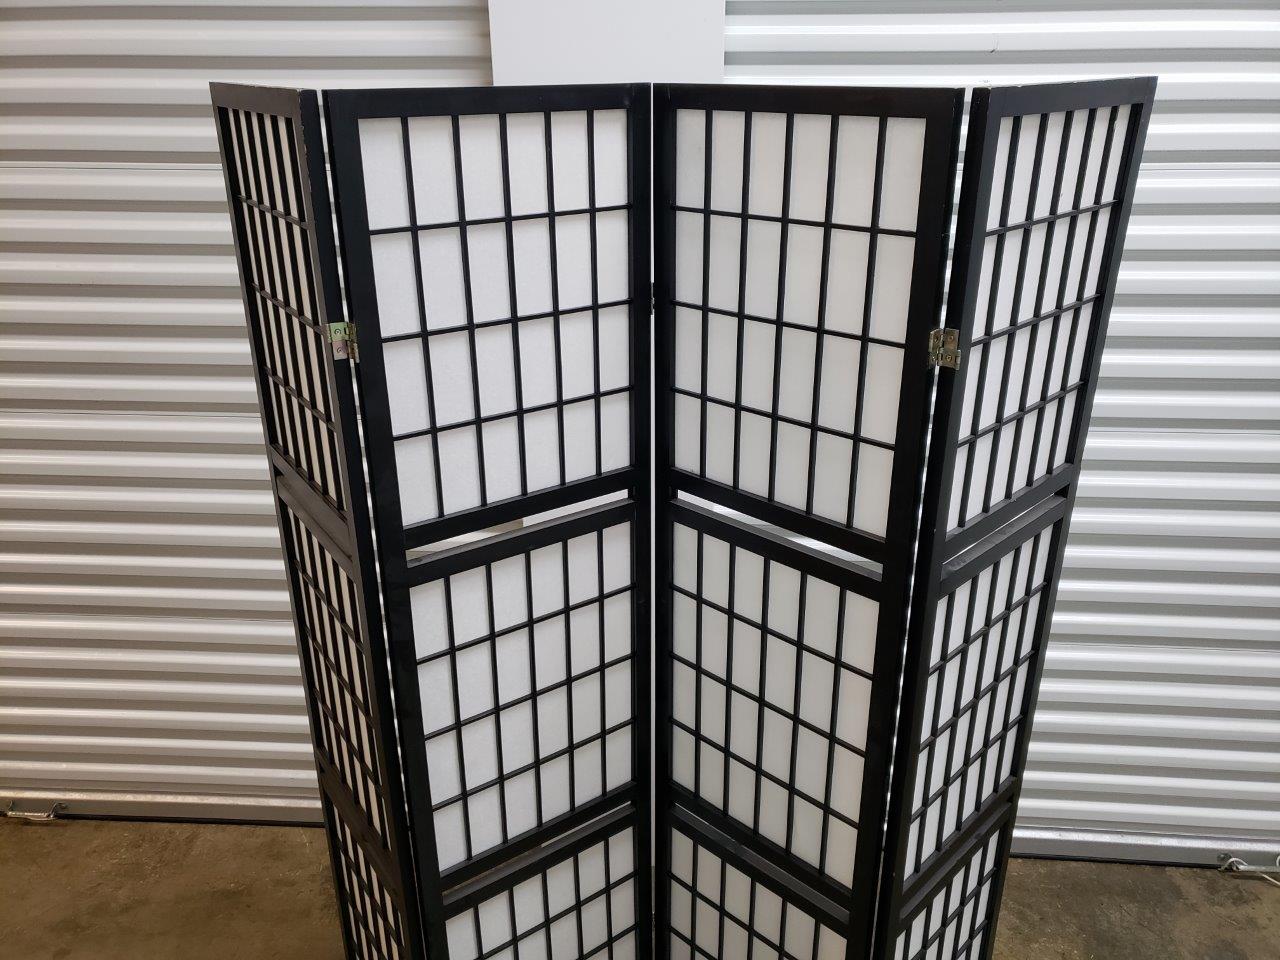 Black 4-Panel Room Divider with Shelving Unit missing